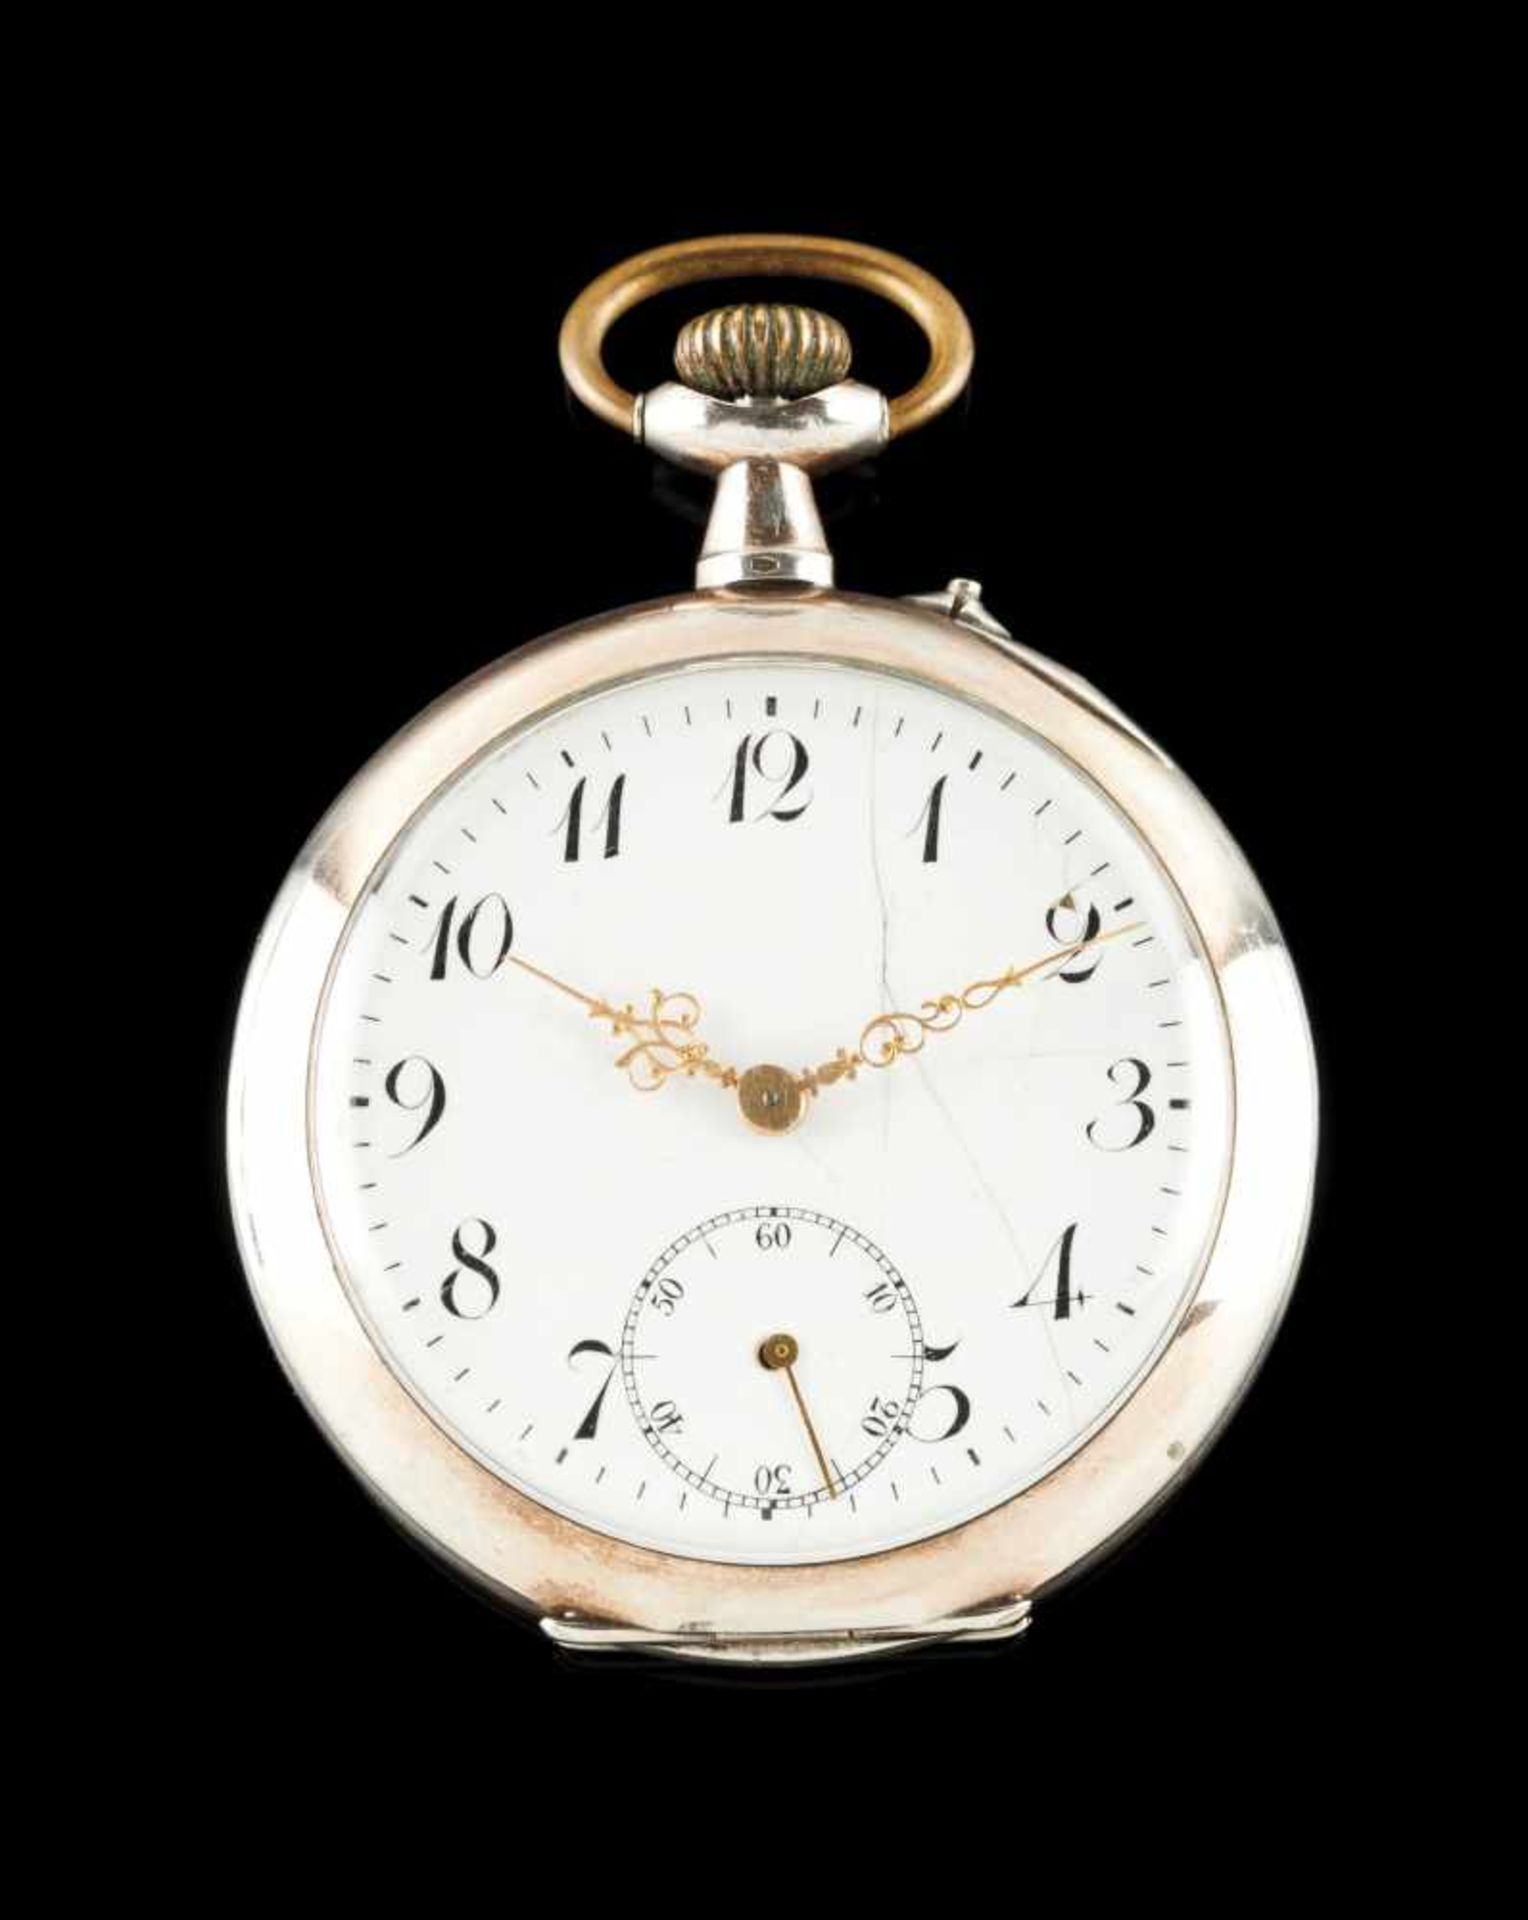 Relógio de bolsoUnmarked pocket watch. Winding mechanic movement. Silver (0,800) case. Some damage